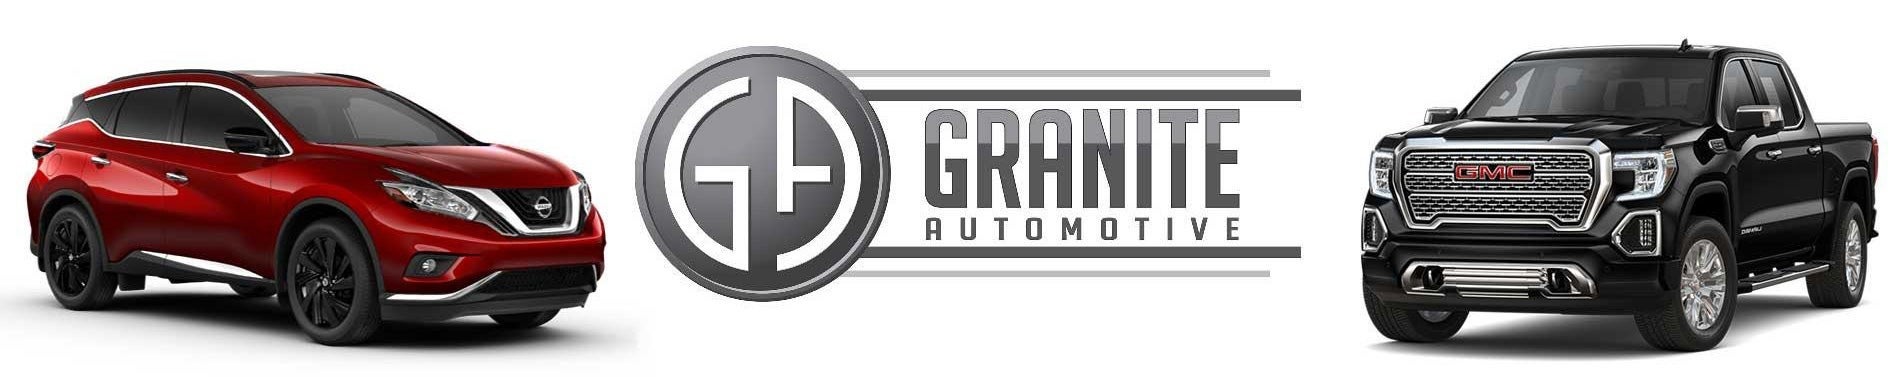 Express Service | Granite Automotive in Rapid City SD